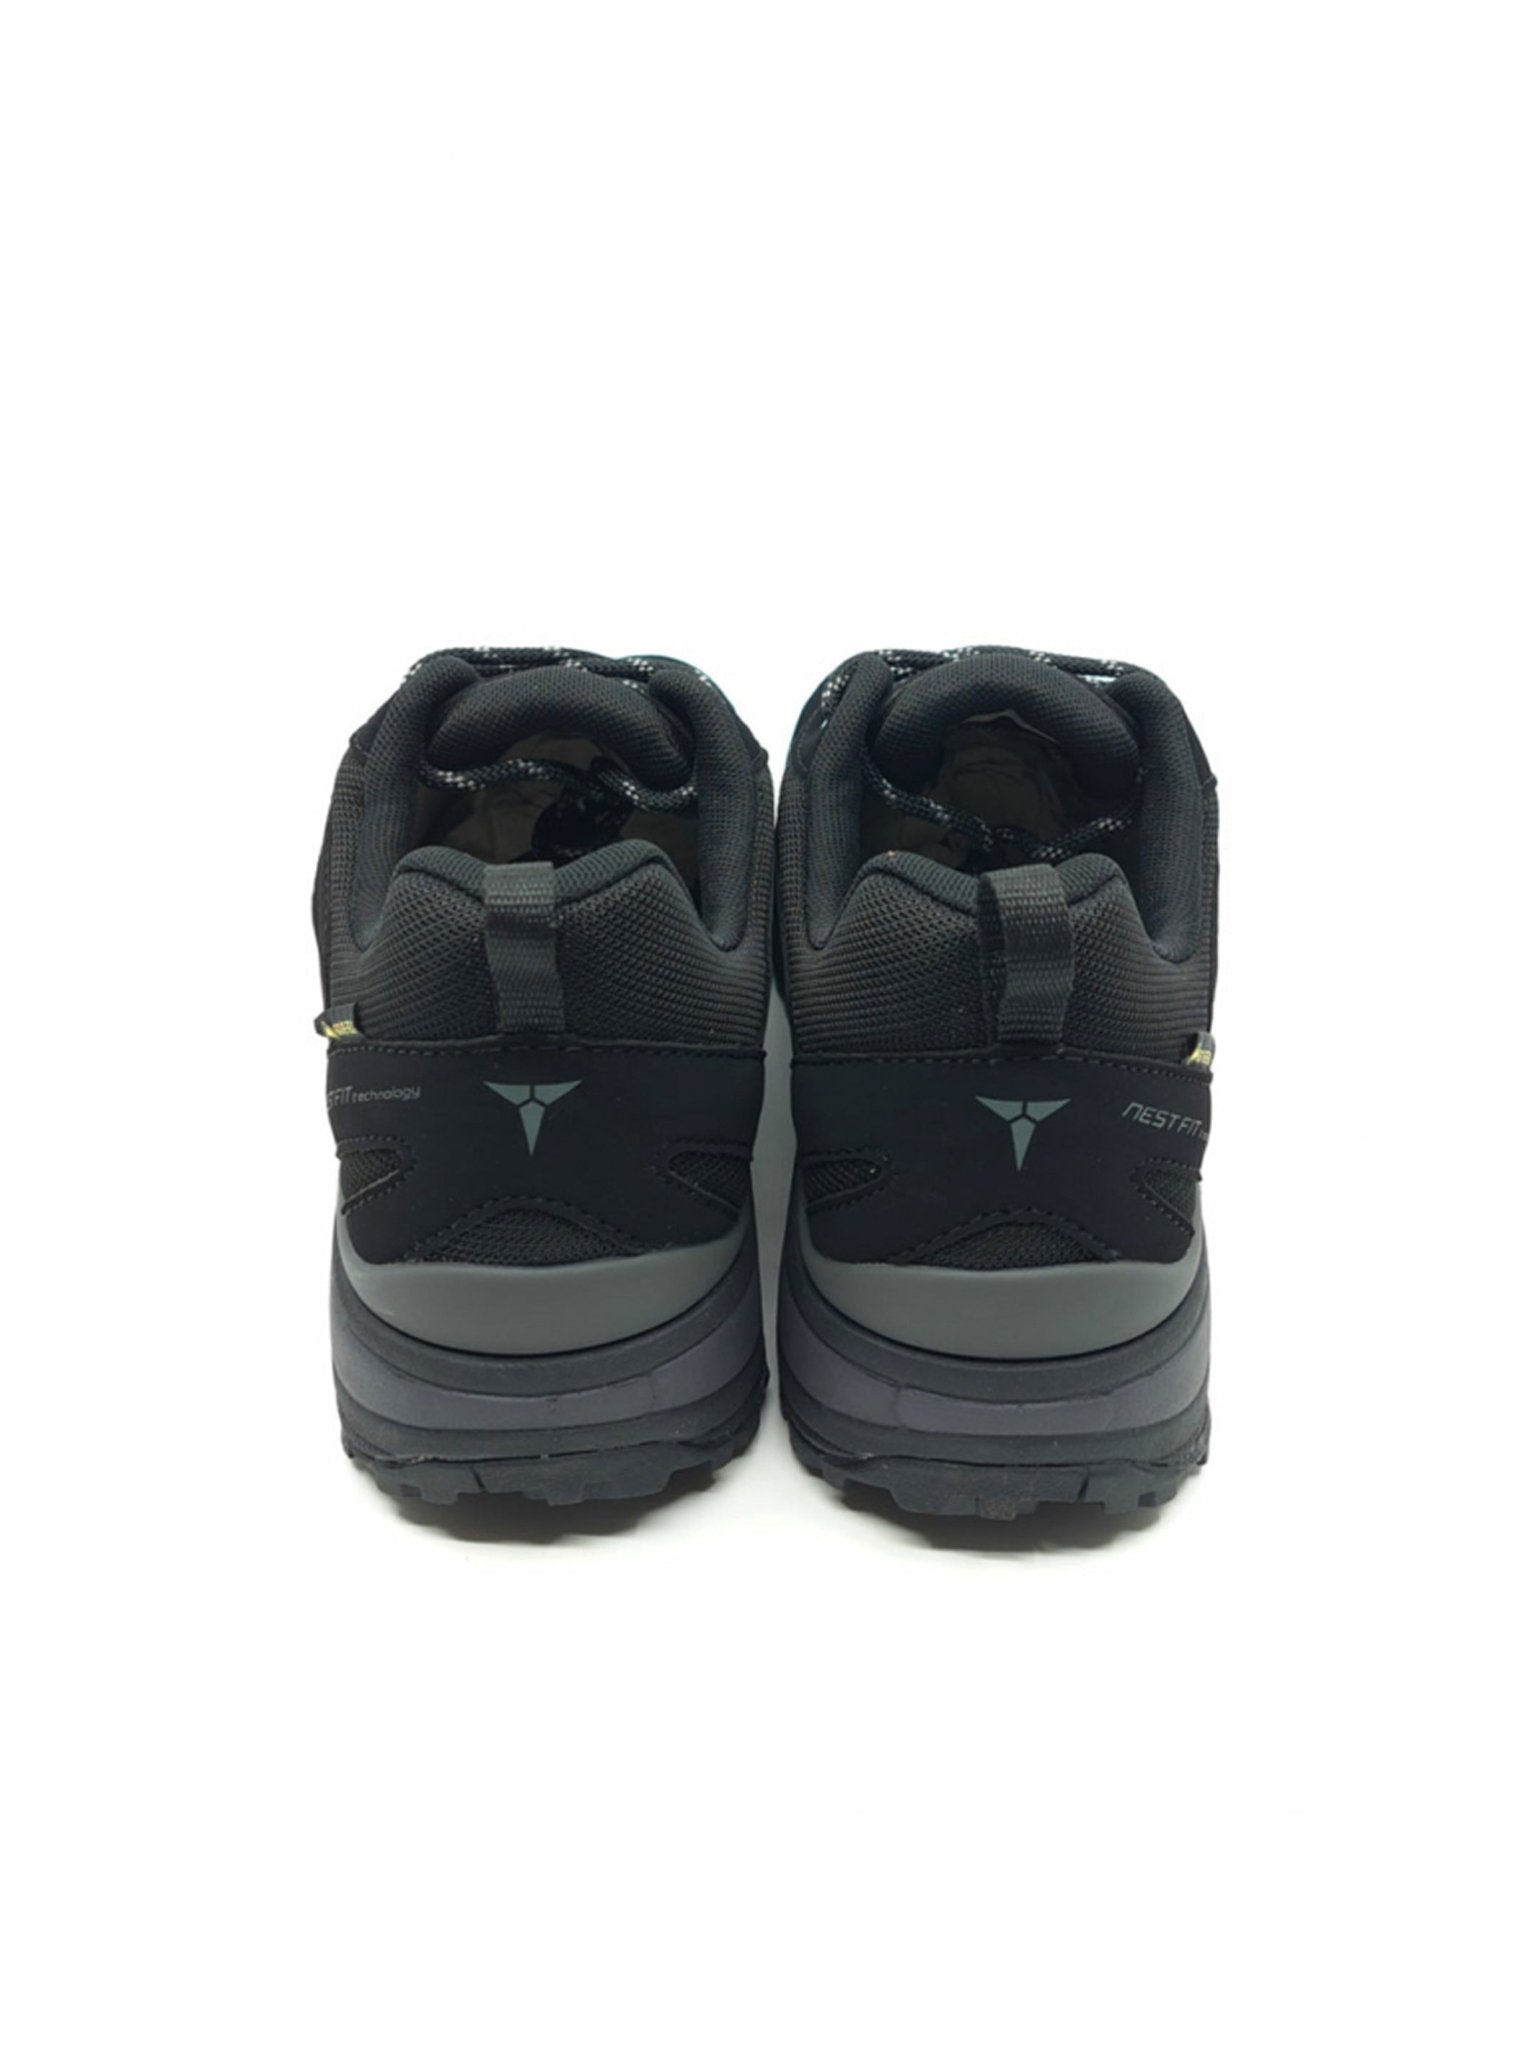 Treksta Treksta - Buxton Lace Low GTX - Gore - Tex Waterproof Low Lace Trail / walking shoe / trainer Shoes